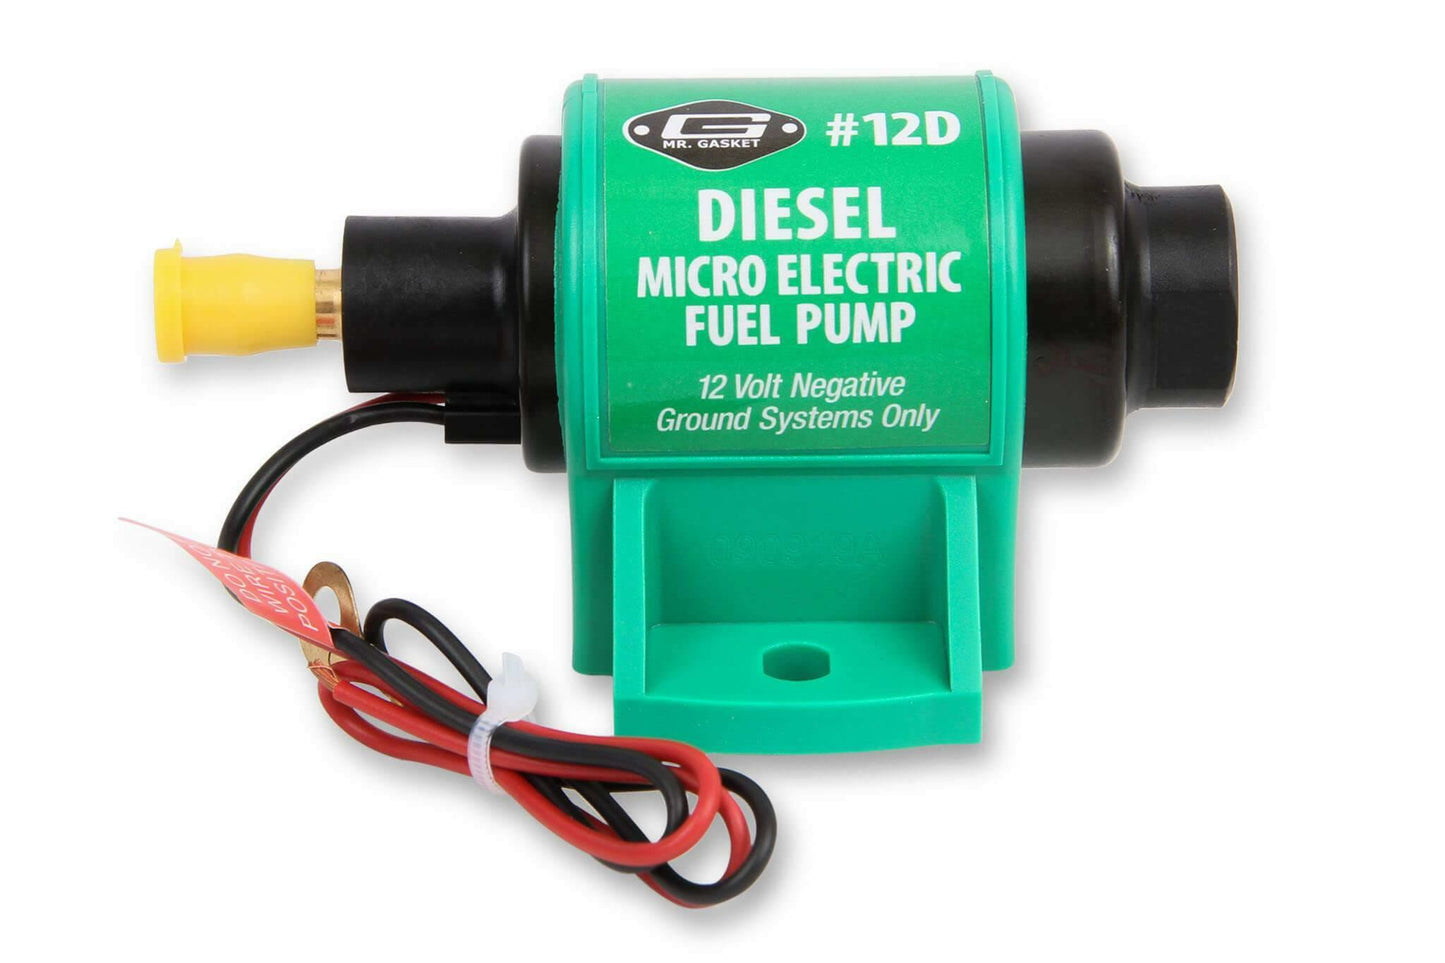 Mr Gasket 12D Electric Fuel Pump 35gph Free Flow for Diesel Engines 4-7 PSI